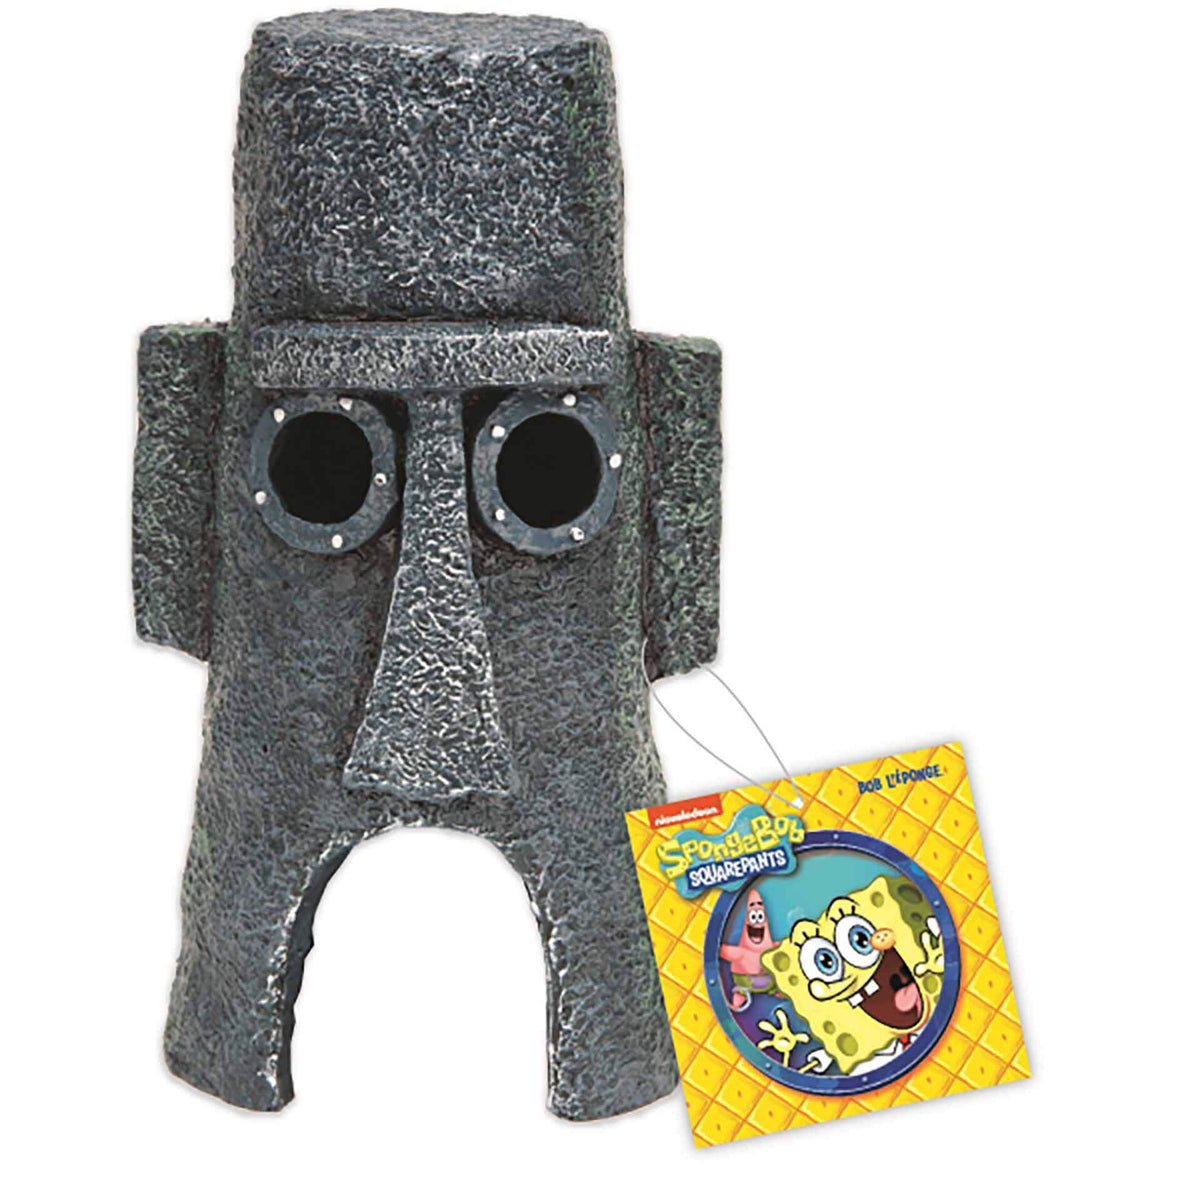 SpongeBob Squarepants &quot;Squidwards&quot; Home Resin Replica 16.5cm High Ornament